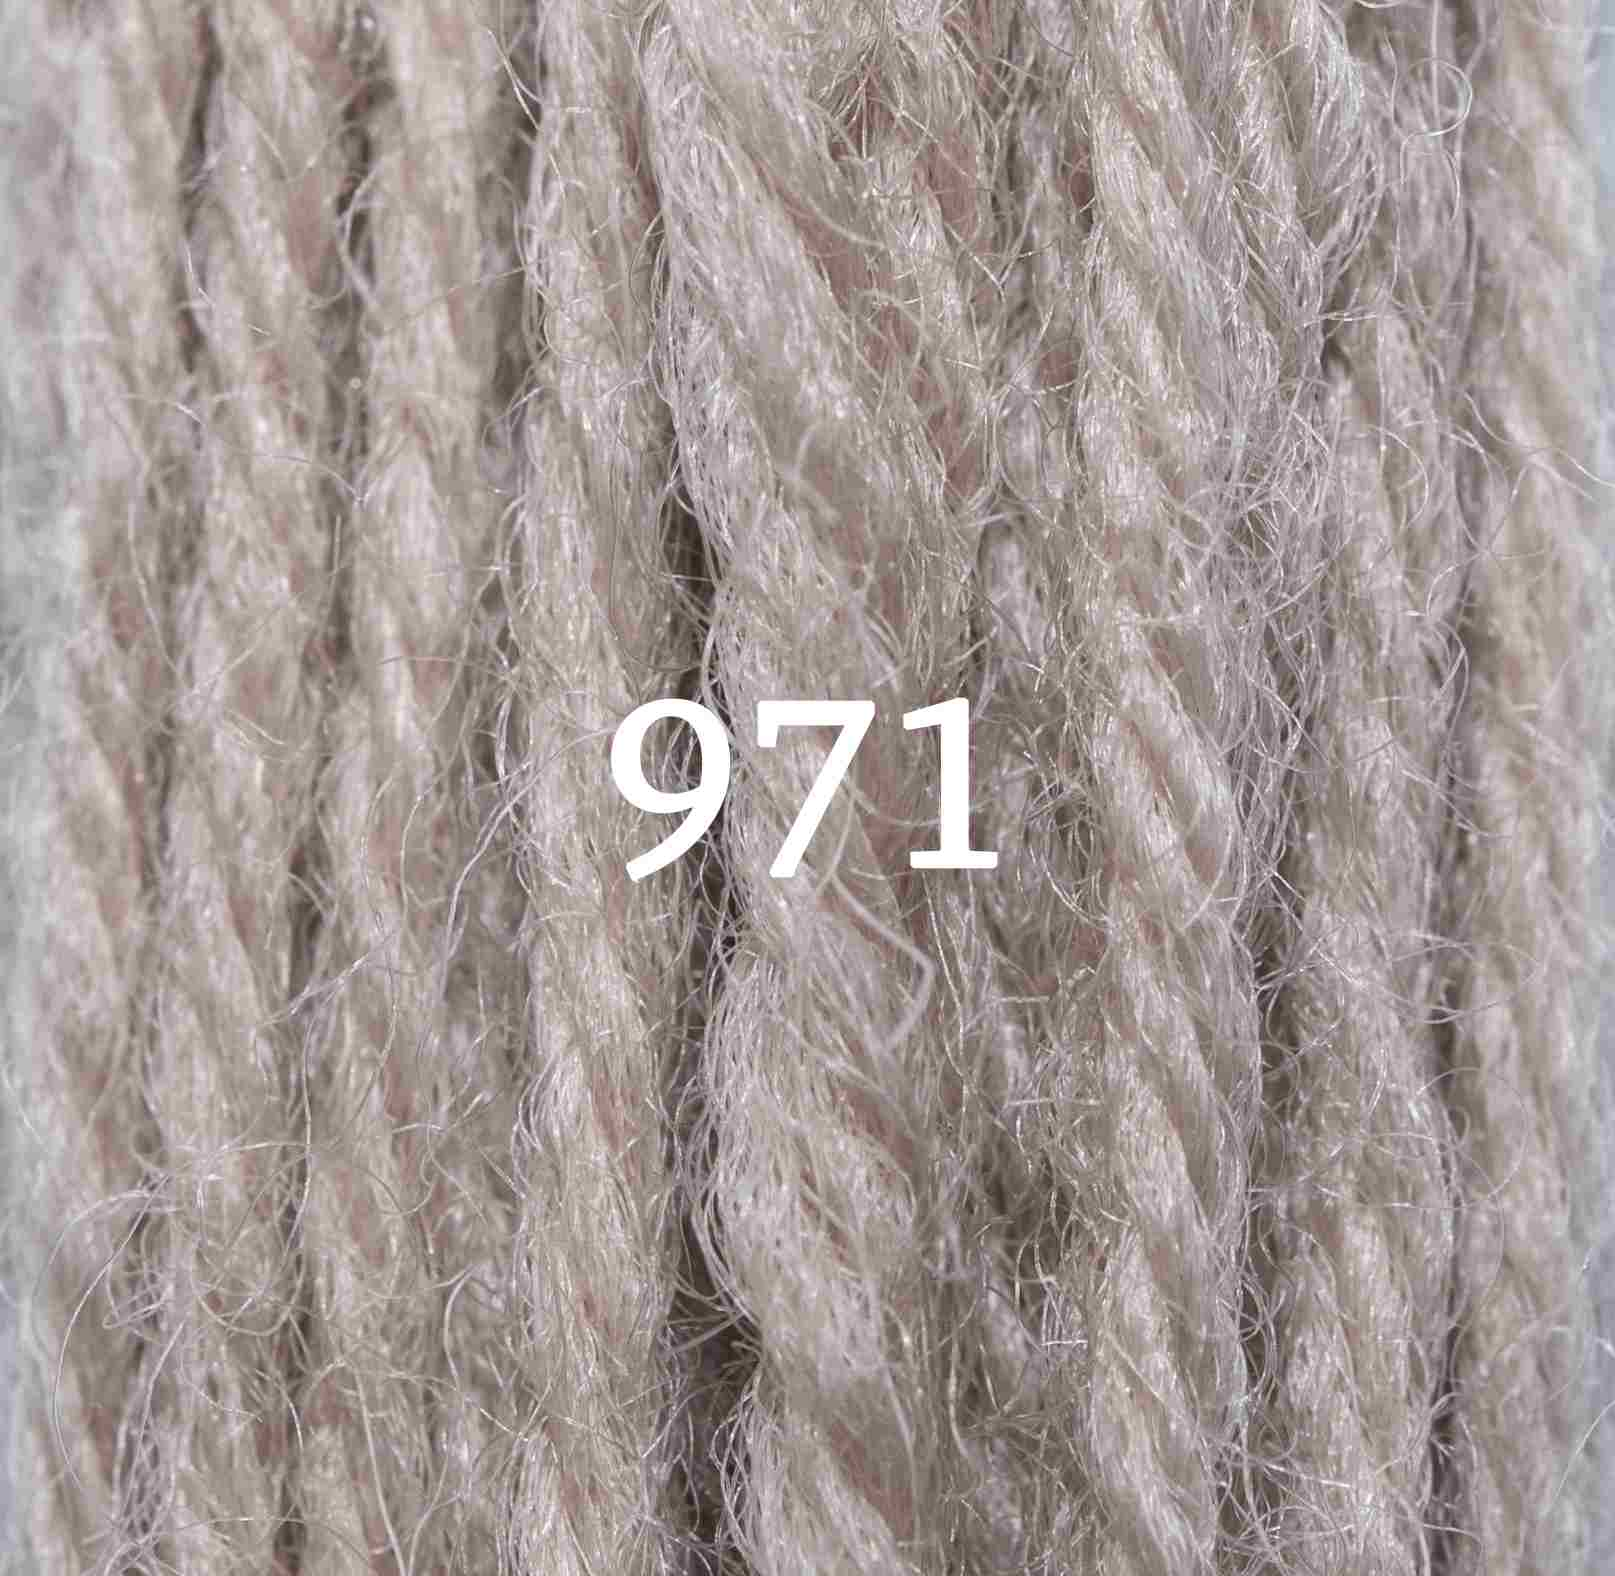 Tapestry - 970 Range (Elephant Grey)